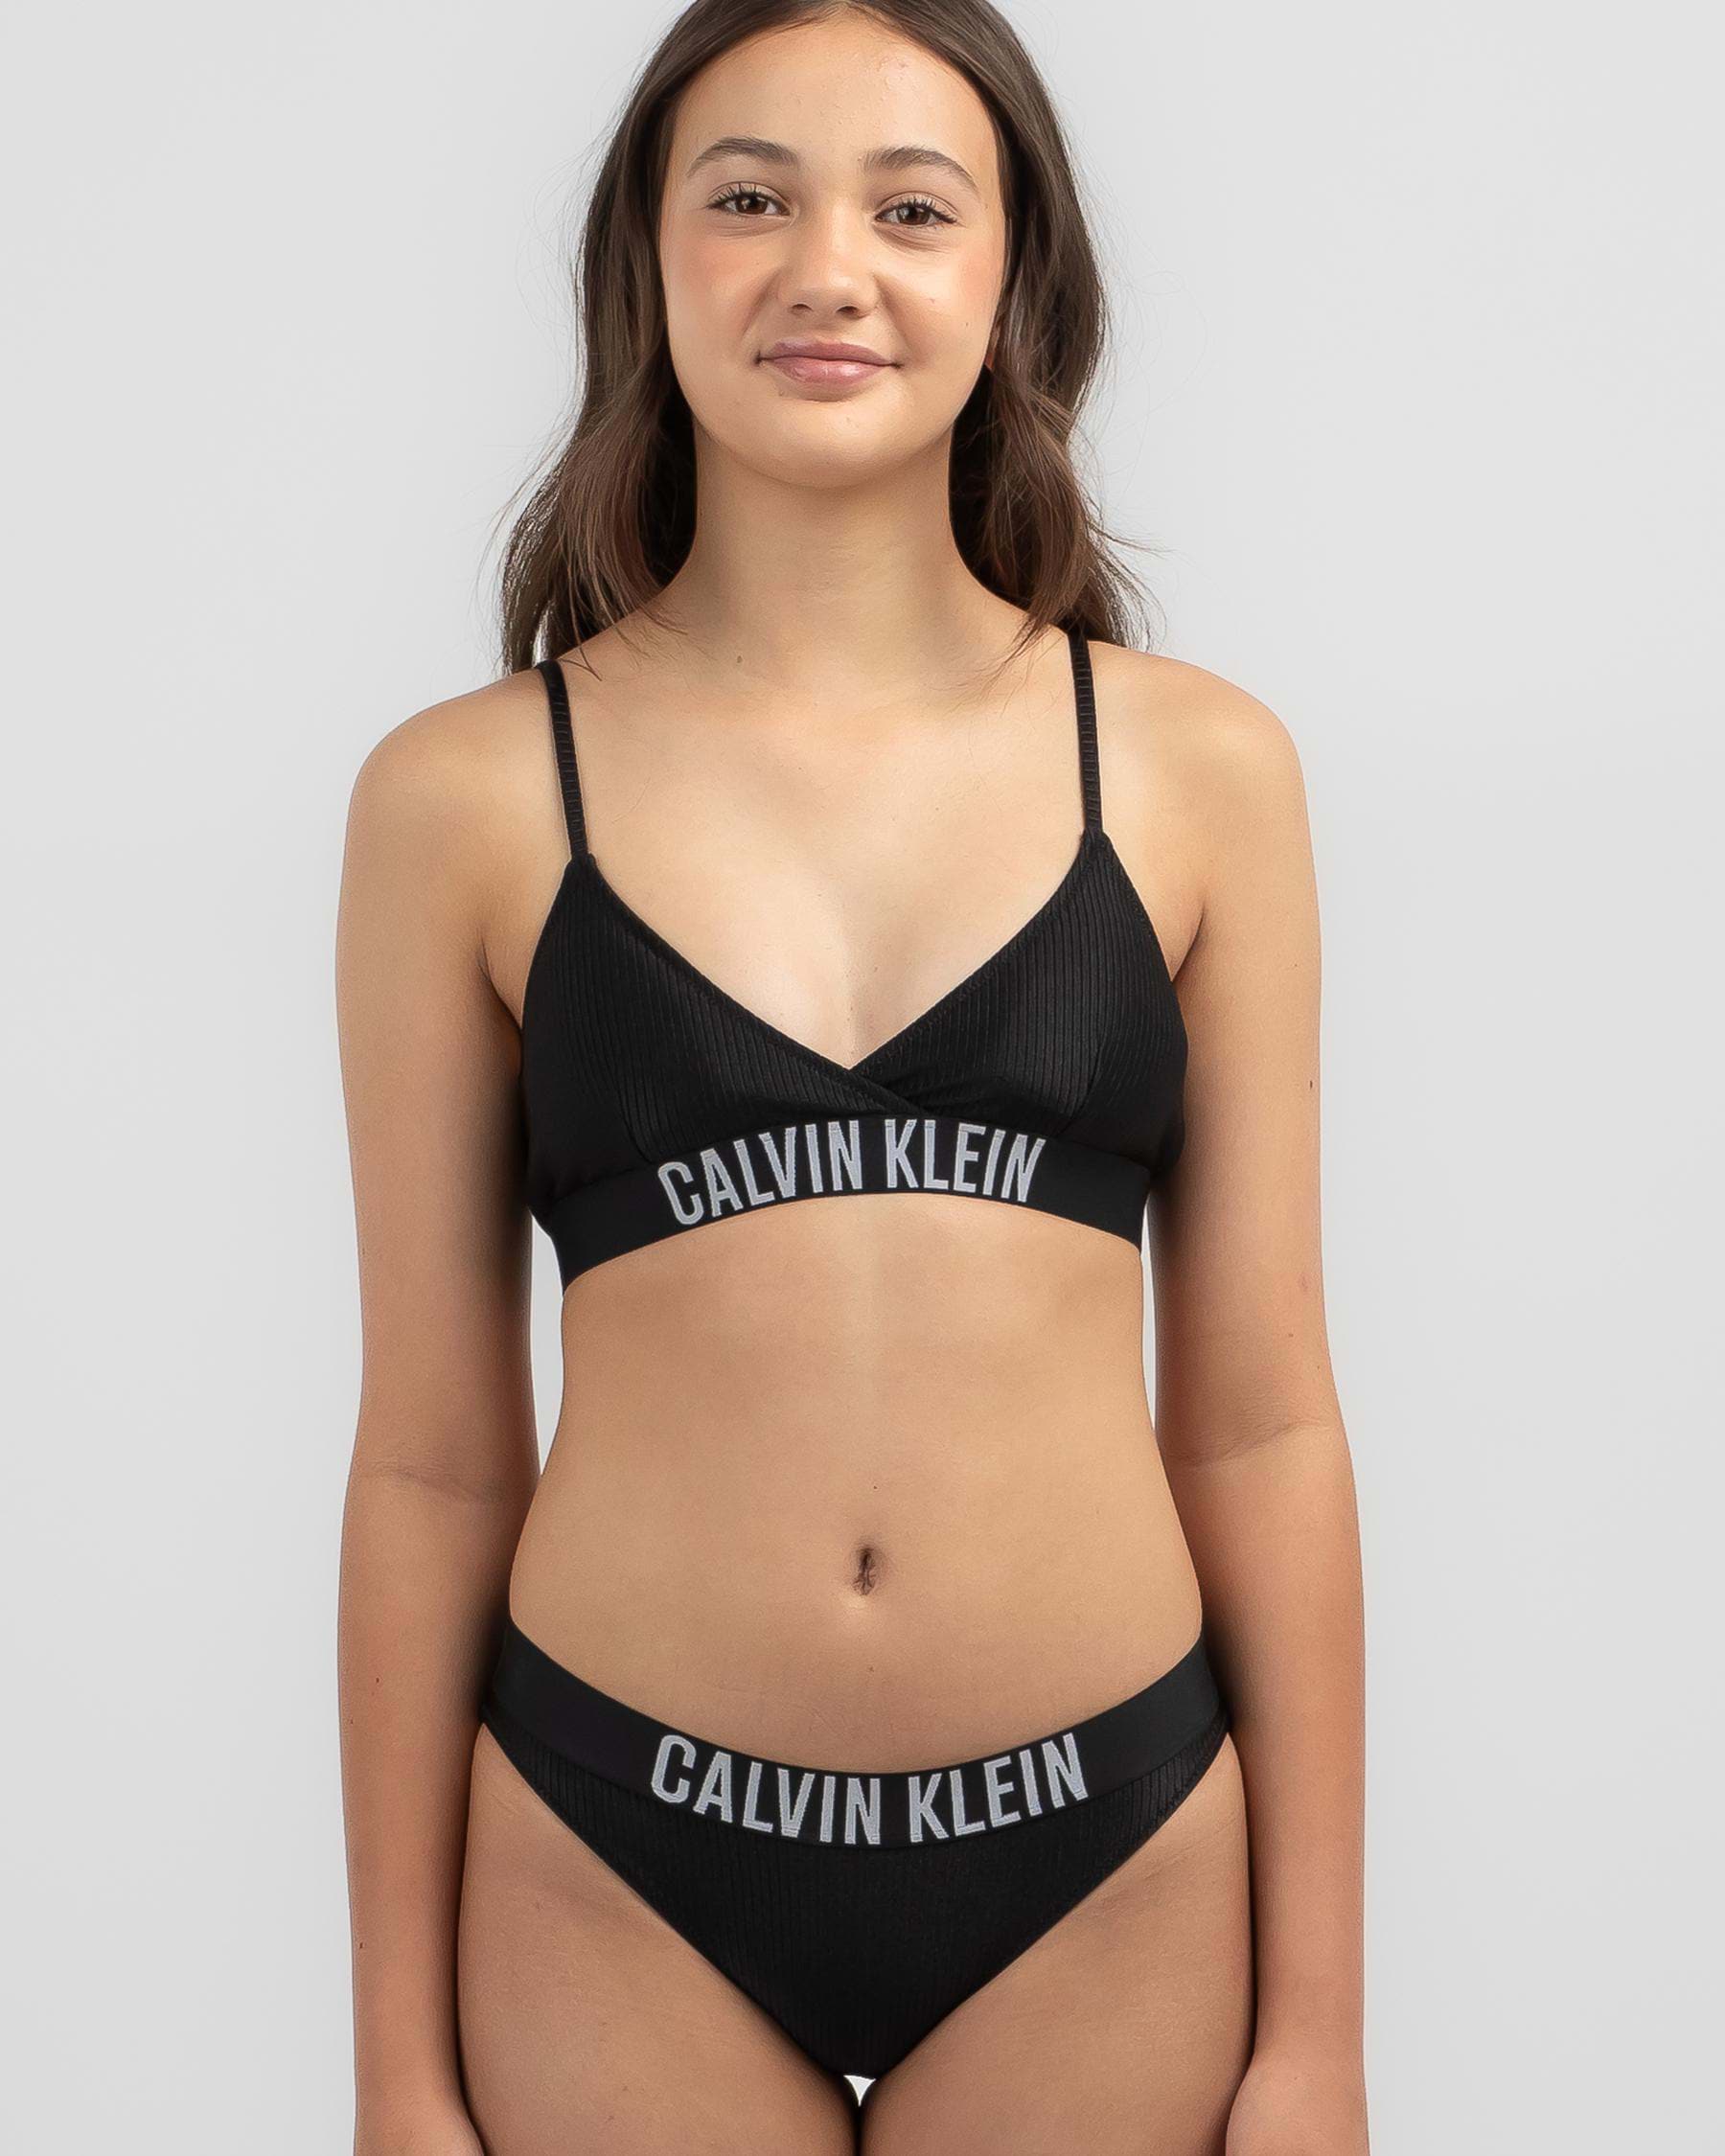 & Beach FREE* Cross Set Bikini States Black Triangle Girls\' Over Calvin Shipping Klein City - - Returns In Pvh Easy United